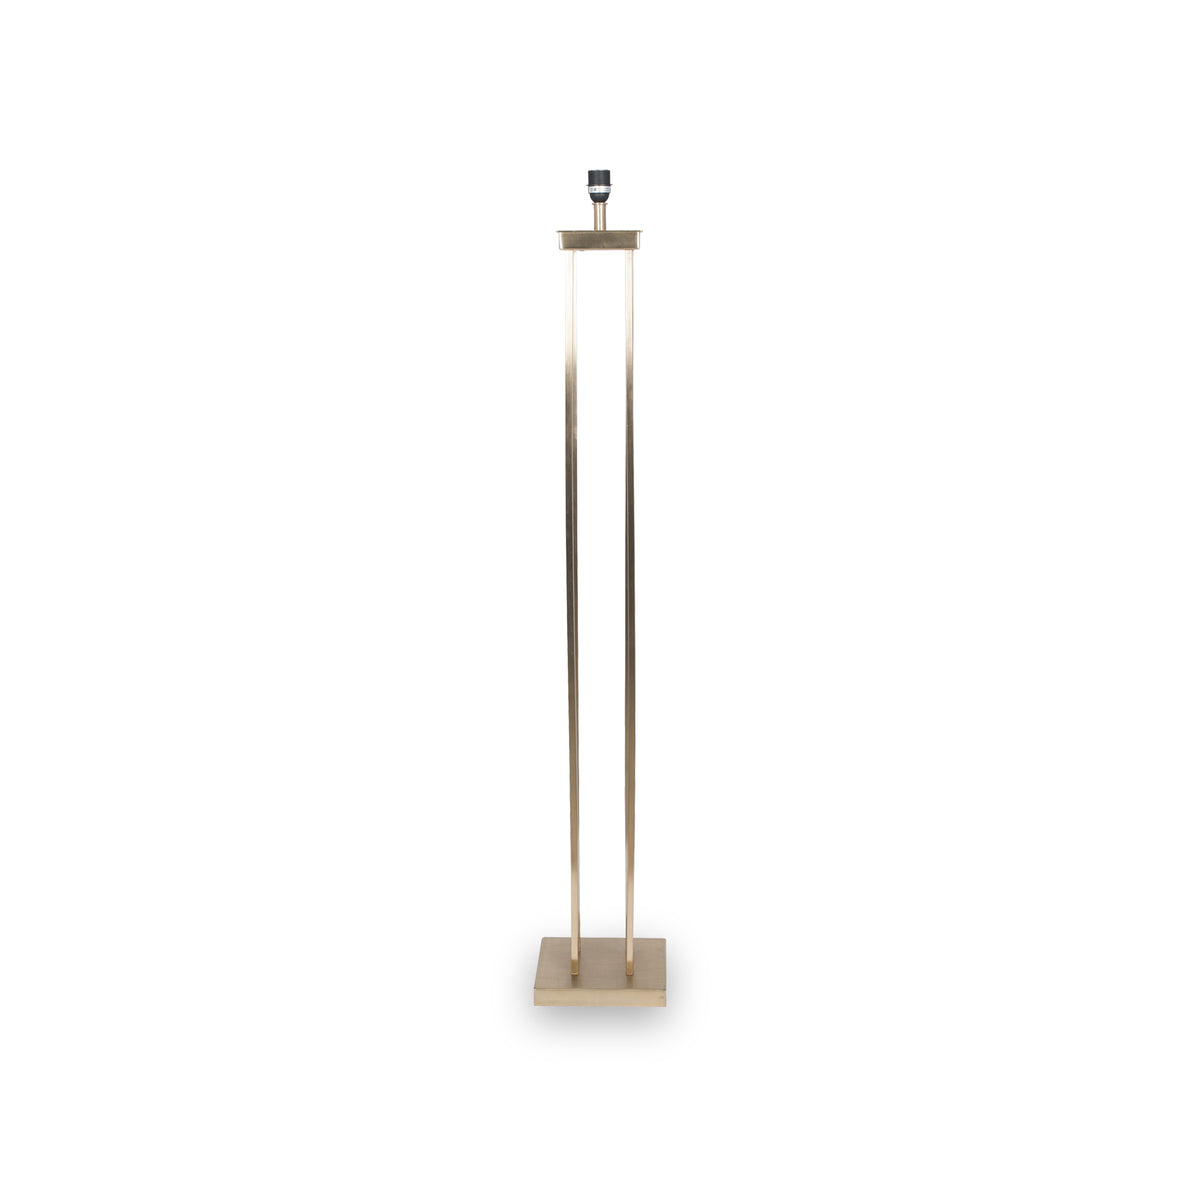 Langston Satin Brass Metal 4 Post Floor Lamp from Roseland Furniture